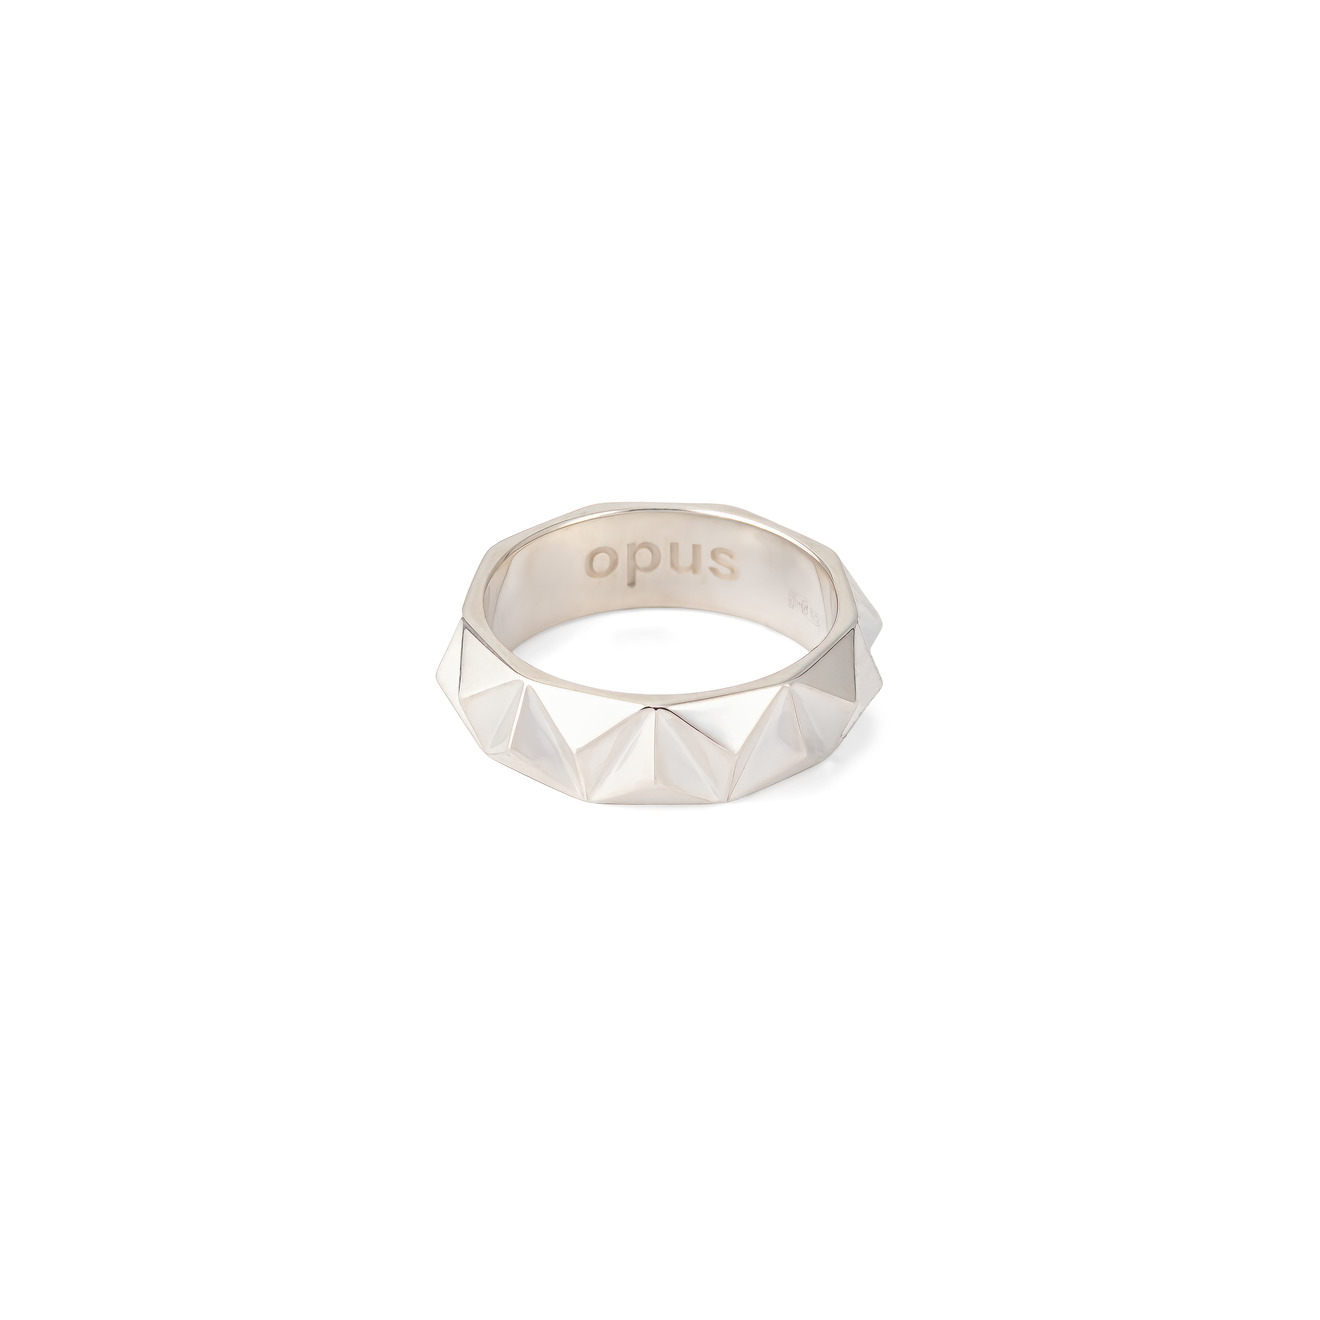 Opus Jewelry Кольцо из серебра с гранями Razor Band Ring 6.5 мм opus jewelry моносерьга из серебра pin earring small